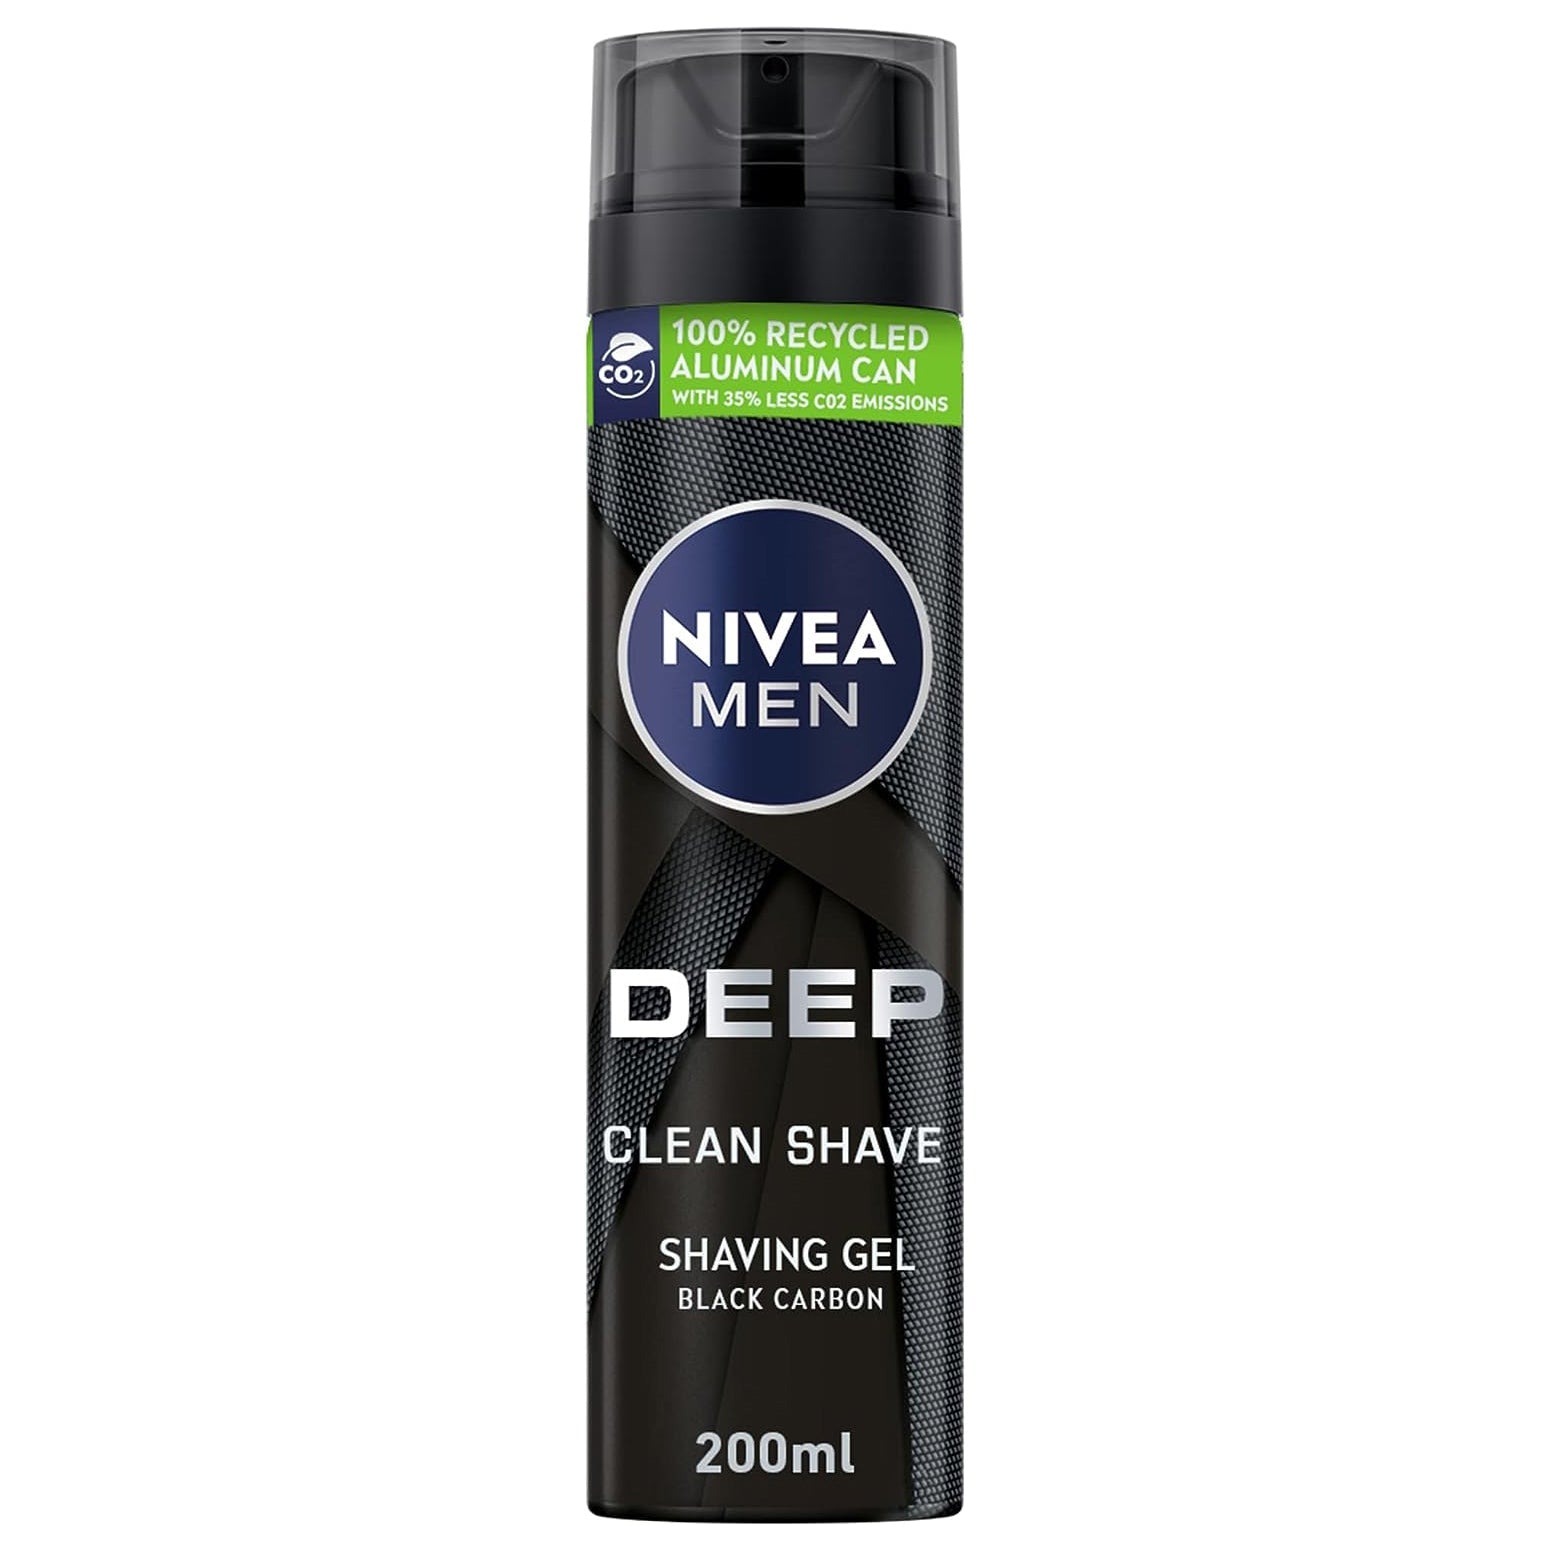 NIVEA MEN Shaving Gel, DEEP Clean Shave Antibacterial Black Carbon, 200ml